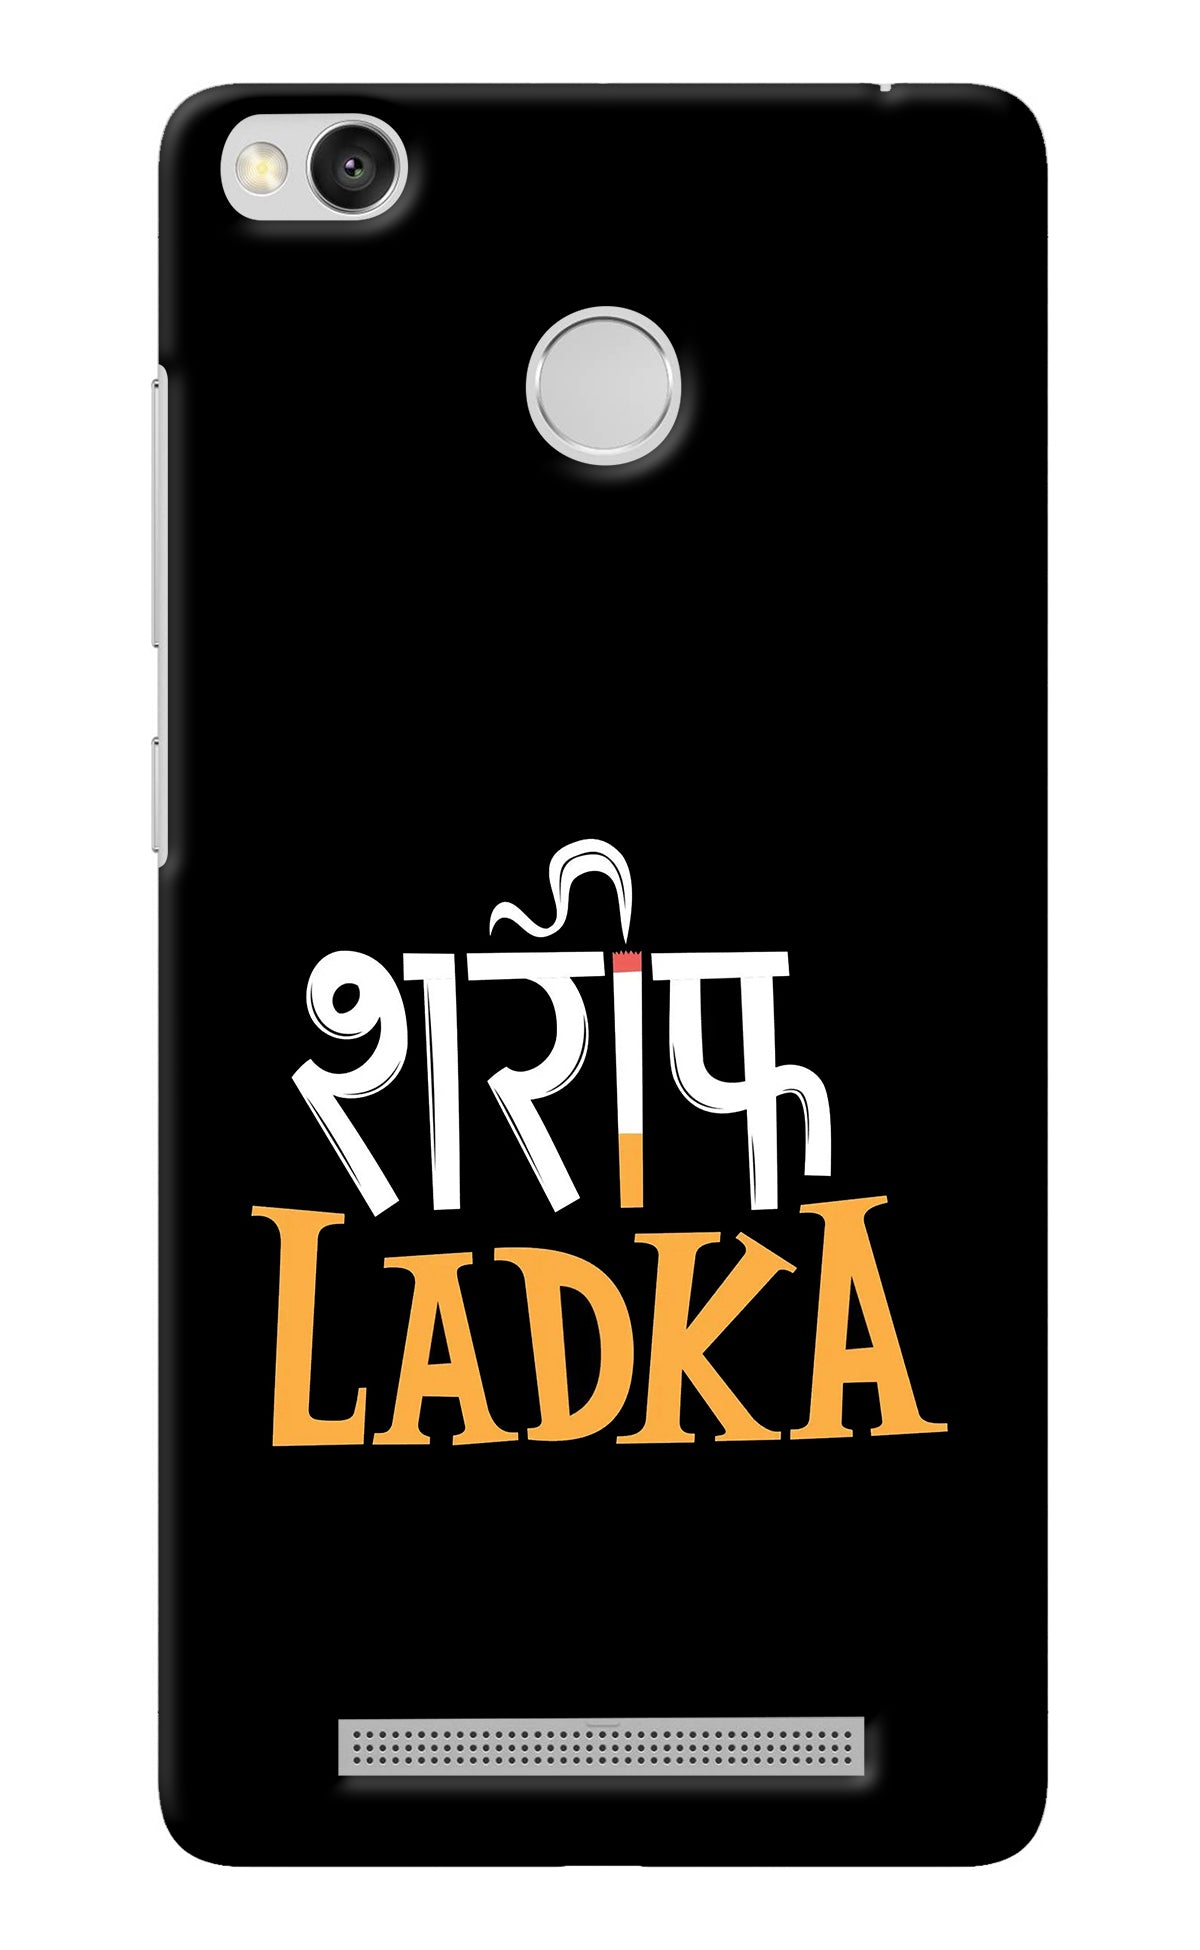 Shareef Ladka Redmi 3S Prime Back Cover